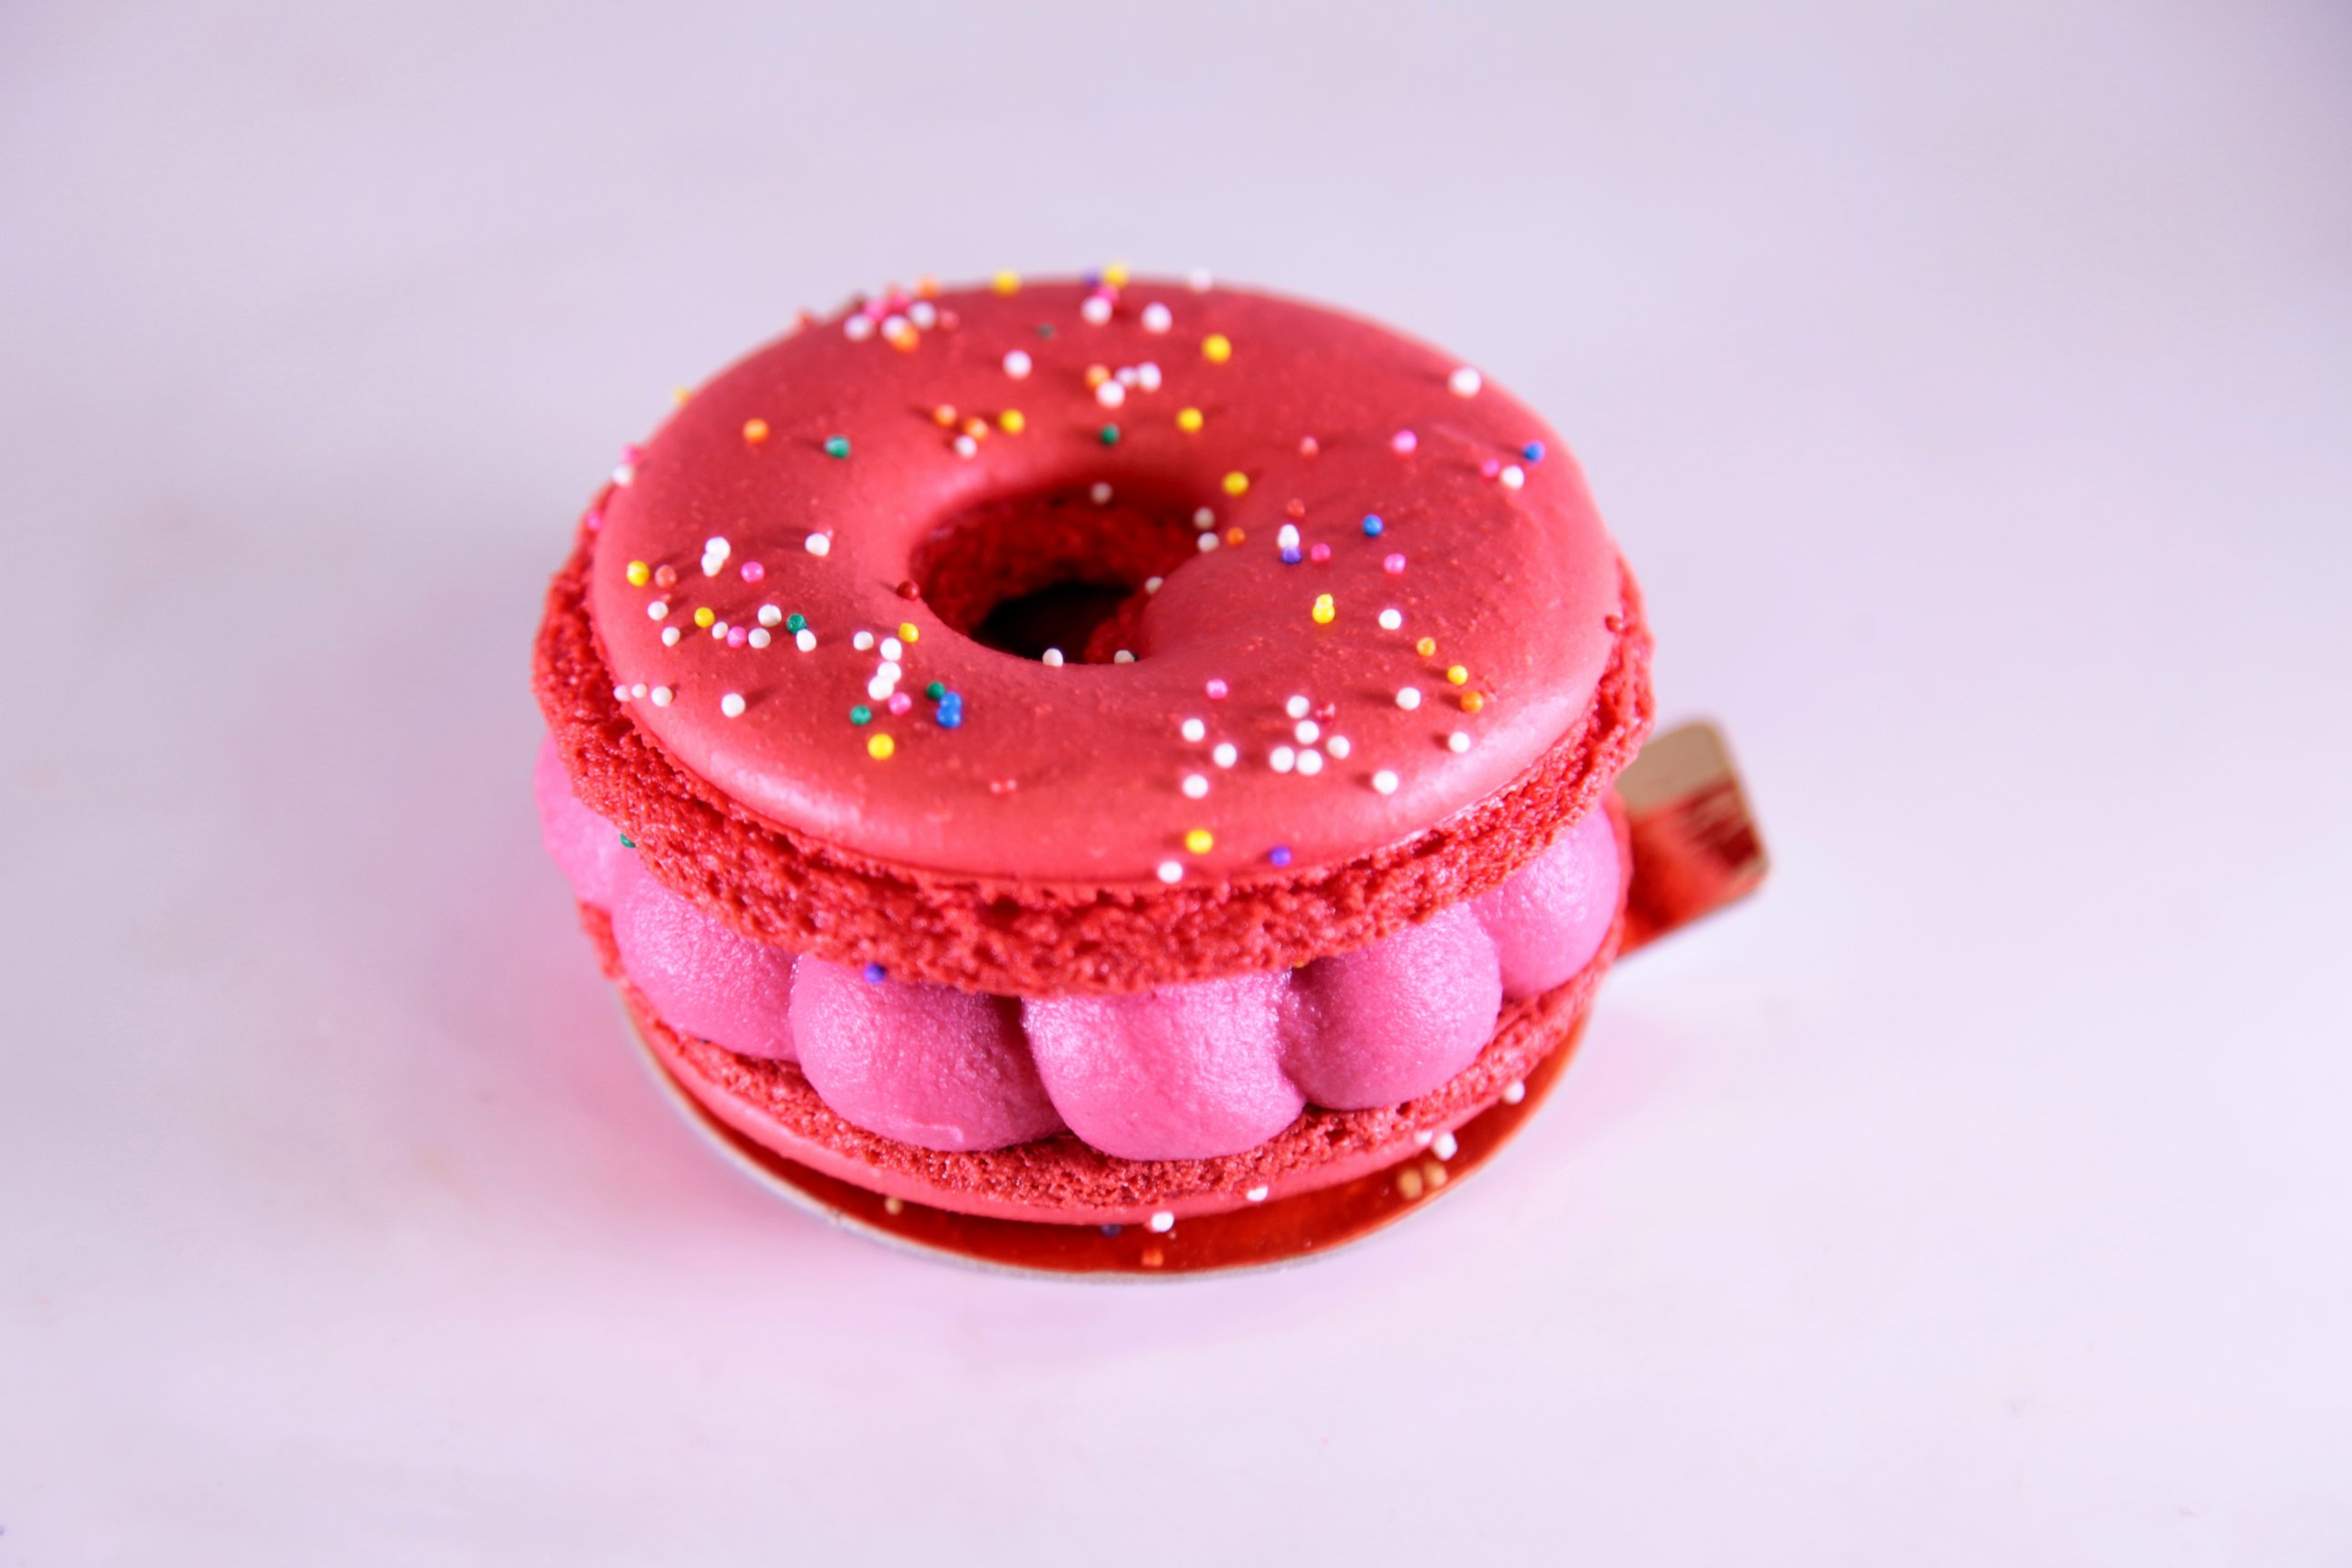 PHOTO: Chef Francois Payard created the Macaron Donut, a hybrid of a macaron and a donut.